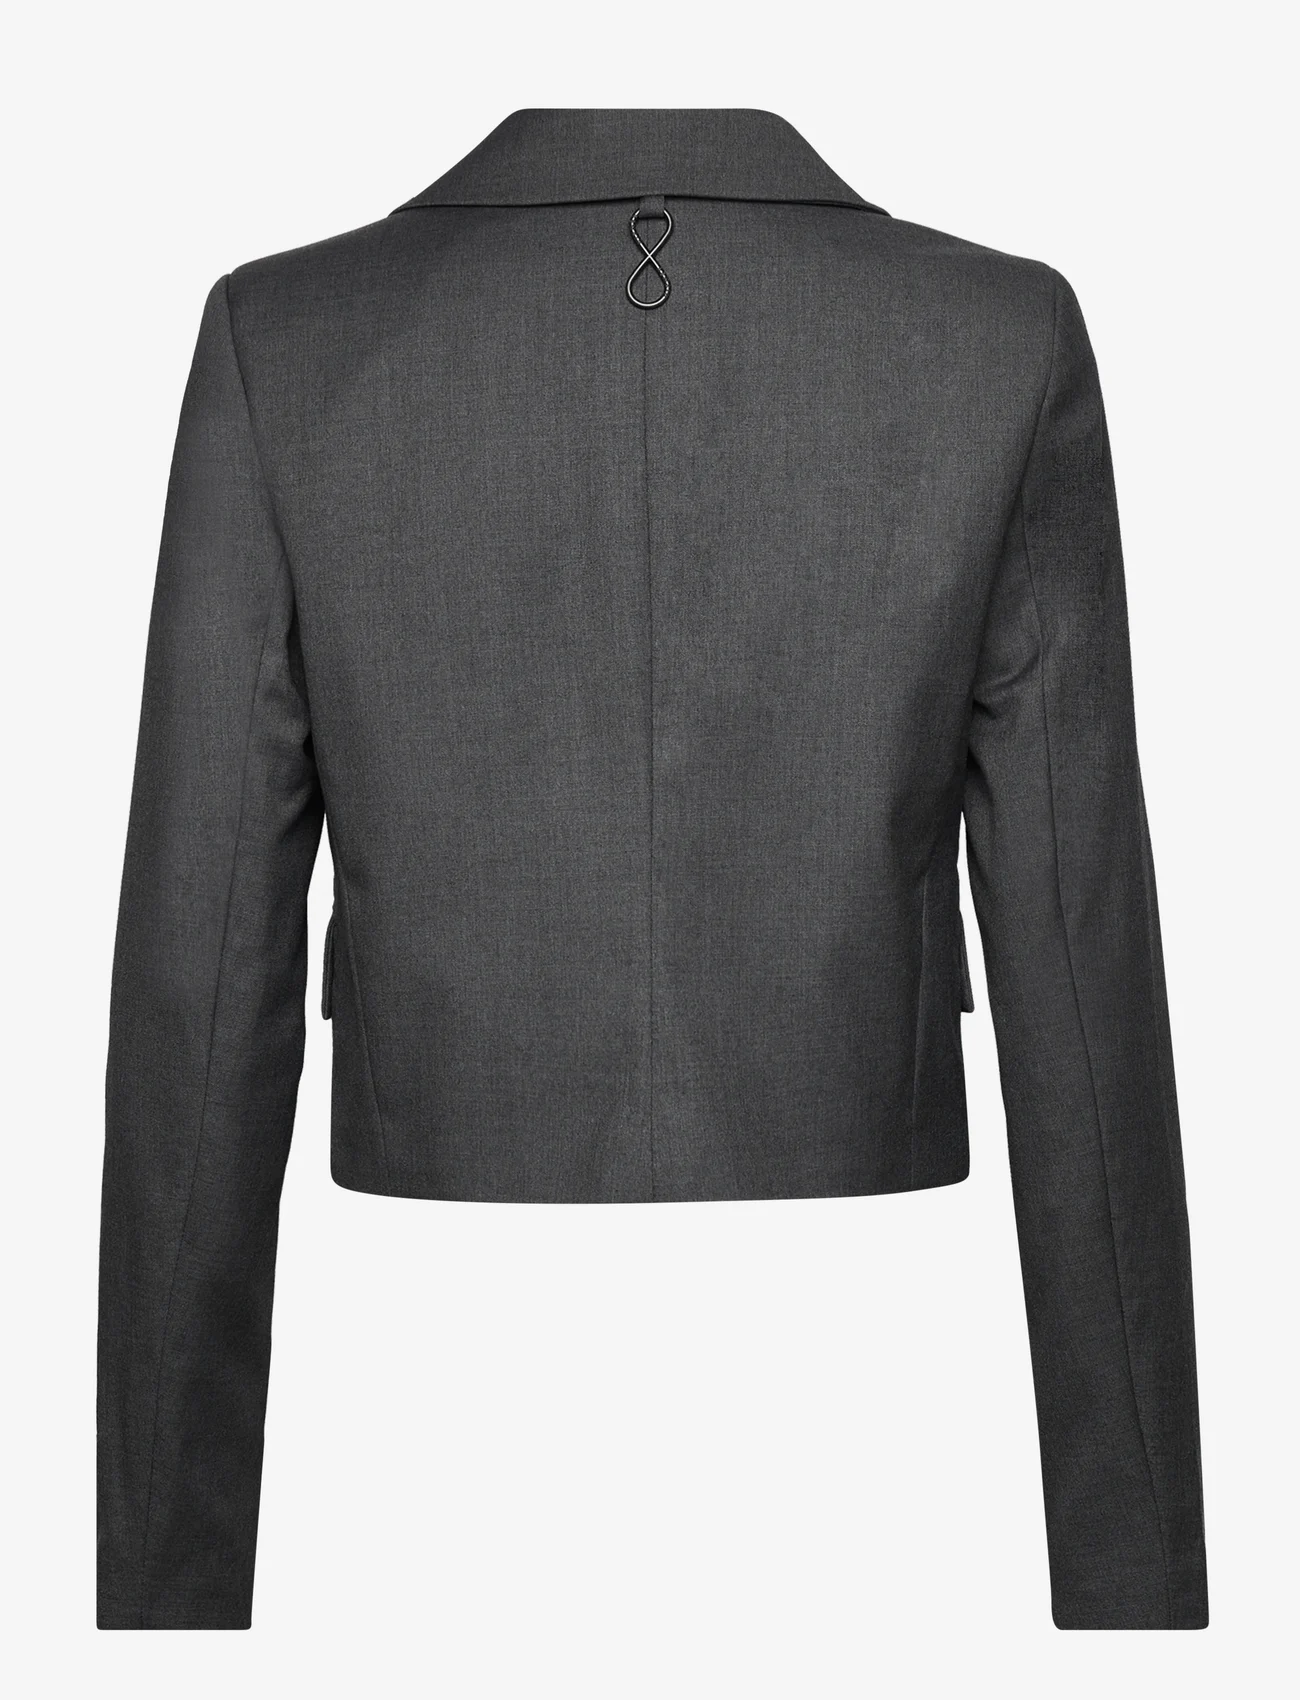 REMAIN Birger Christensen - Light Wool Mini Blazer - feestelijke kleding voor outlet-prijzen - castlerock - 1